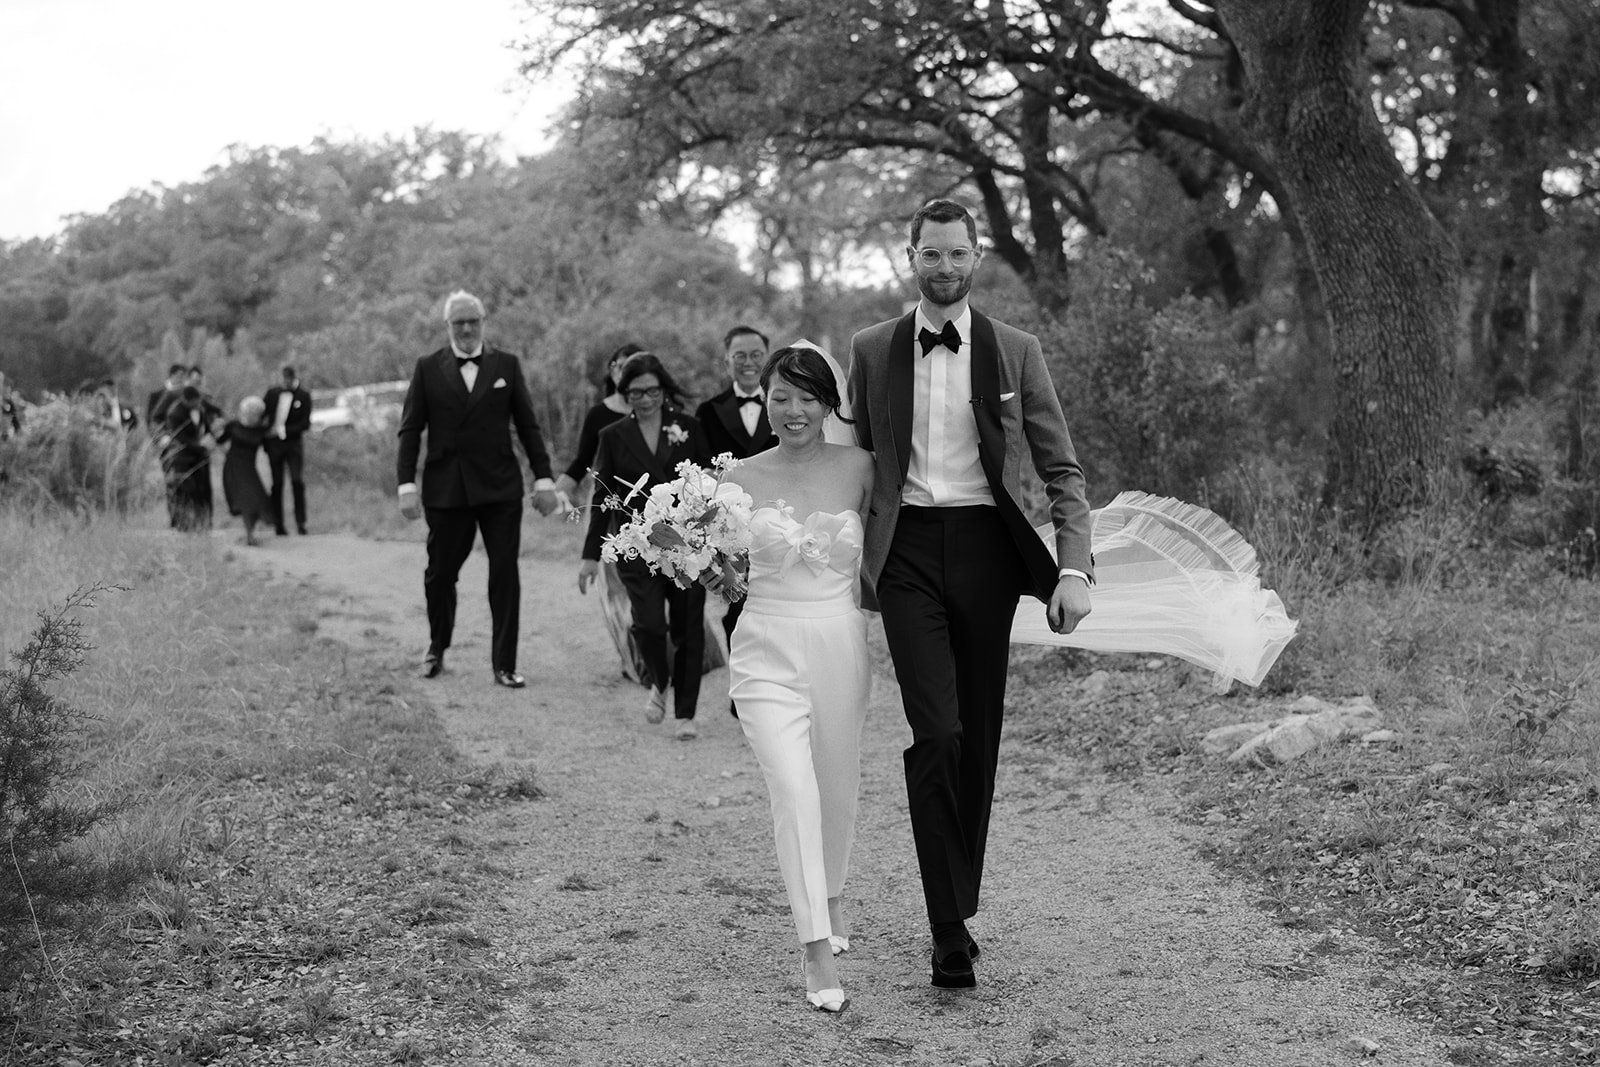 Best-Austin-Candid-Wedding-Photographers-Film-Documentary-35mm-Prospect-House-81.jpg